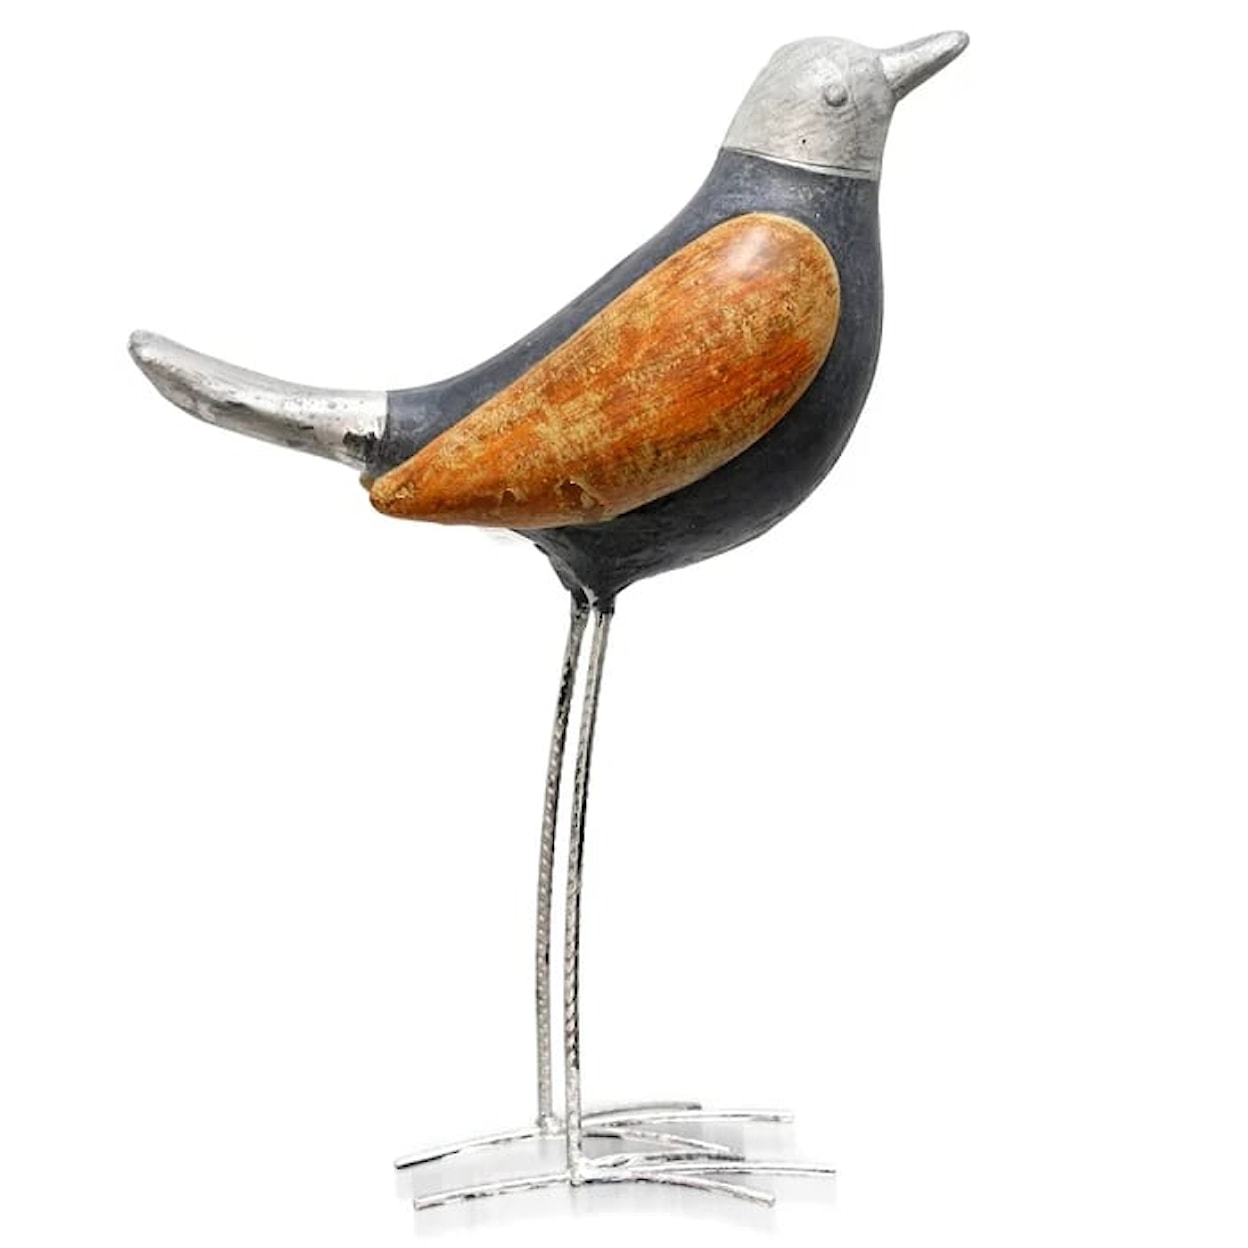 StyleCraft Accessories Long Legged Songbird